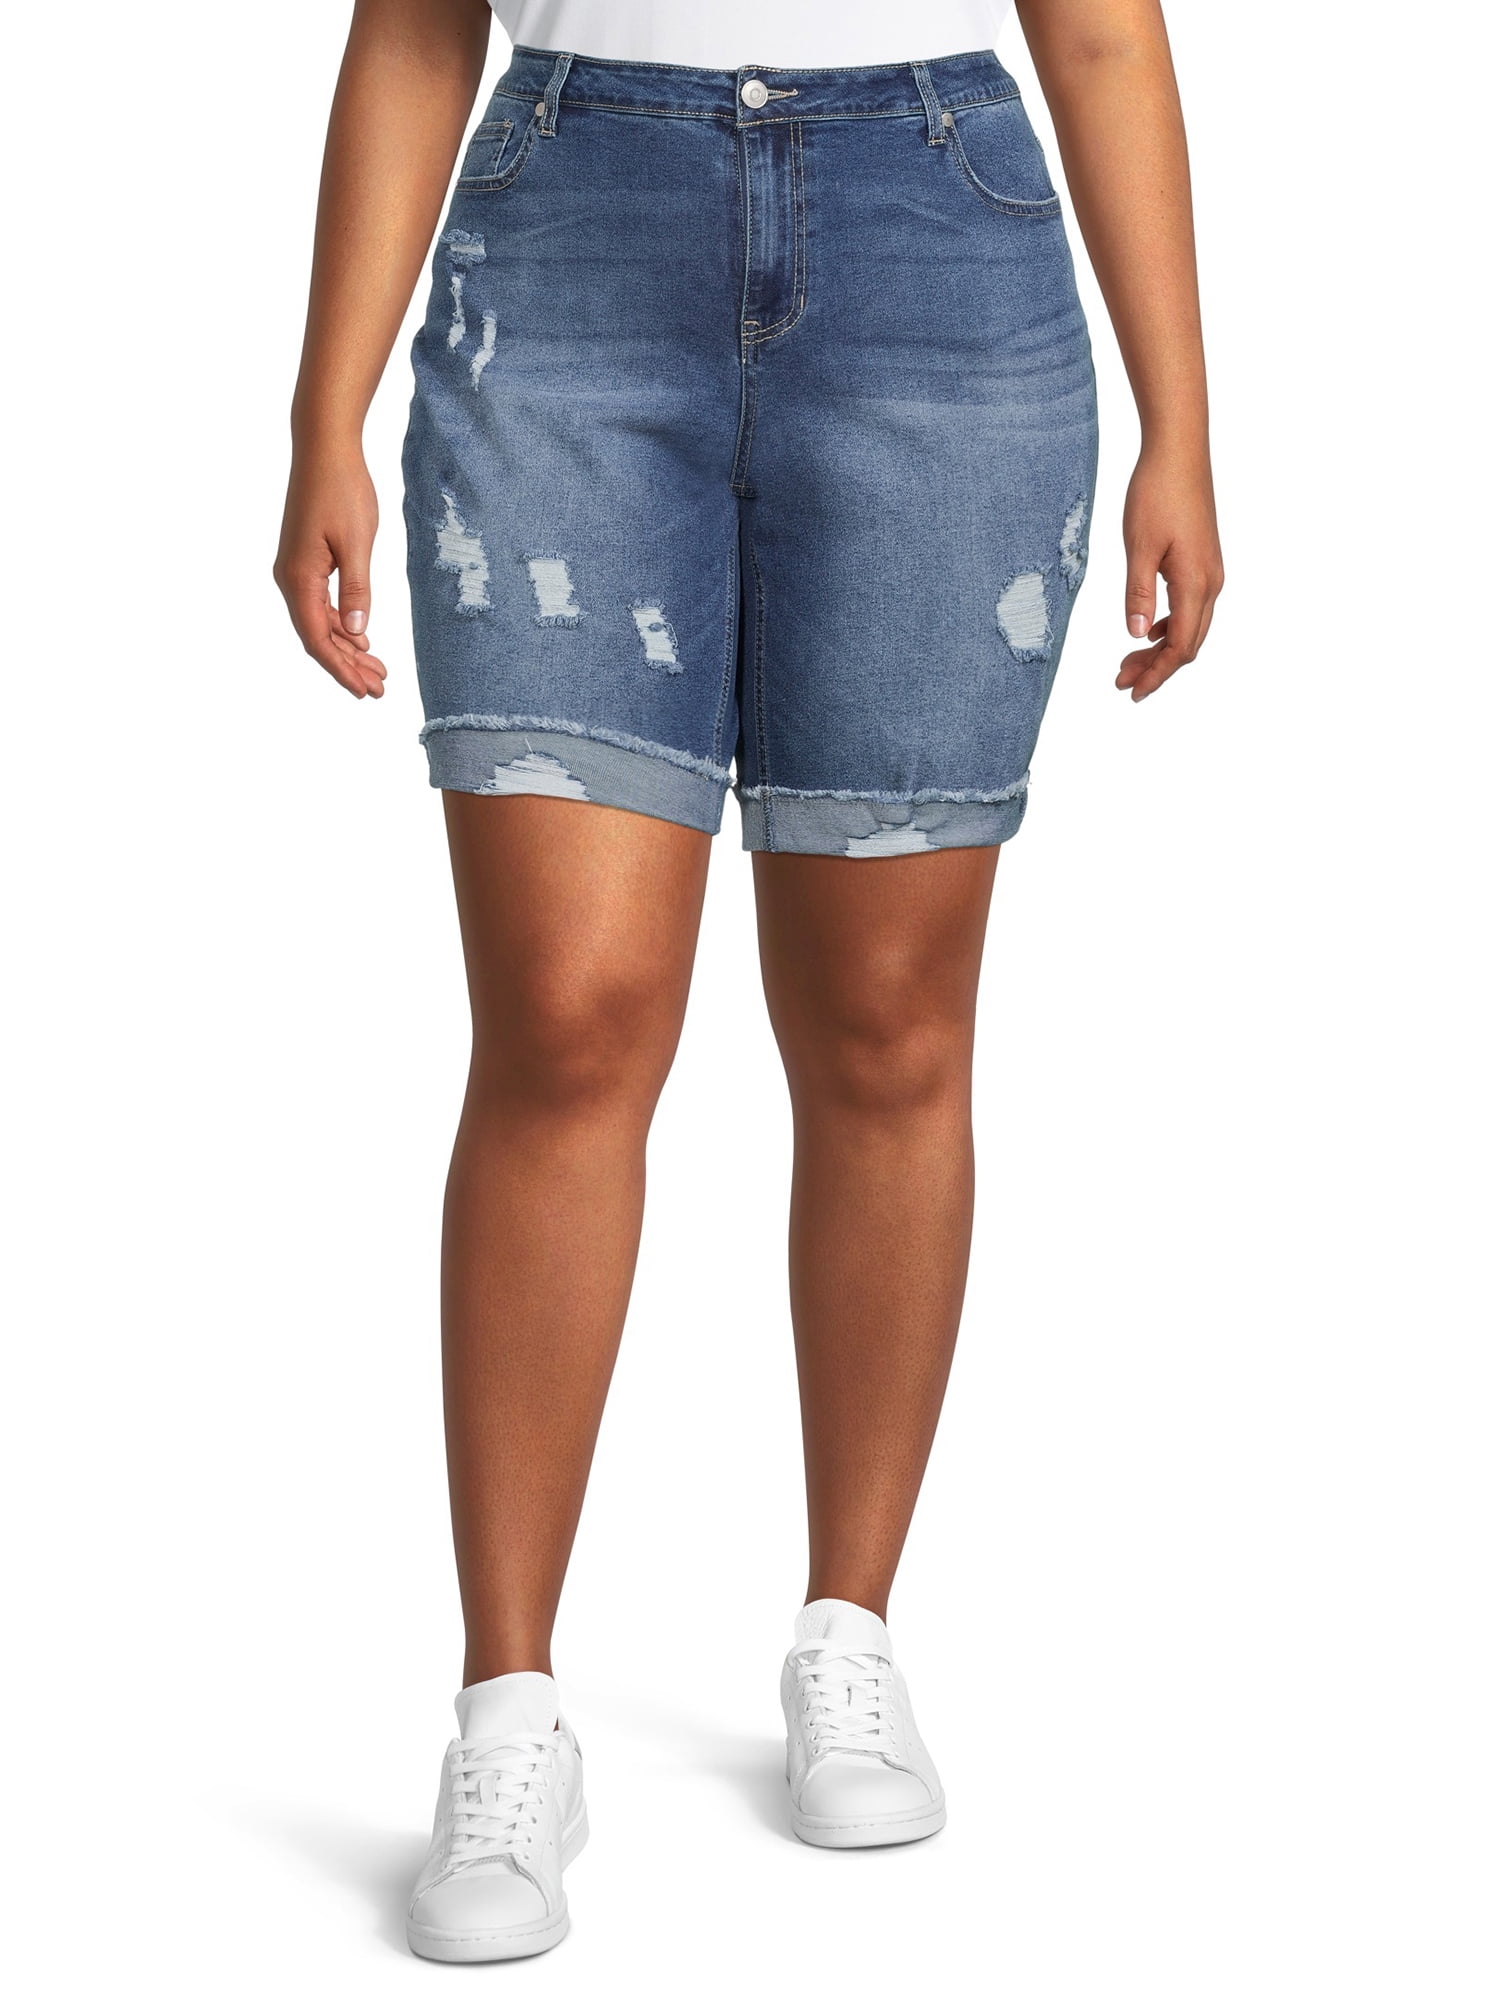 model wearing denim bermuda shorts